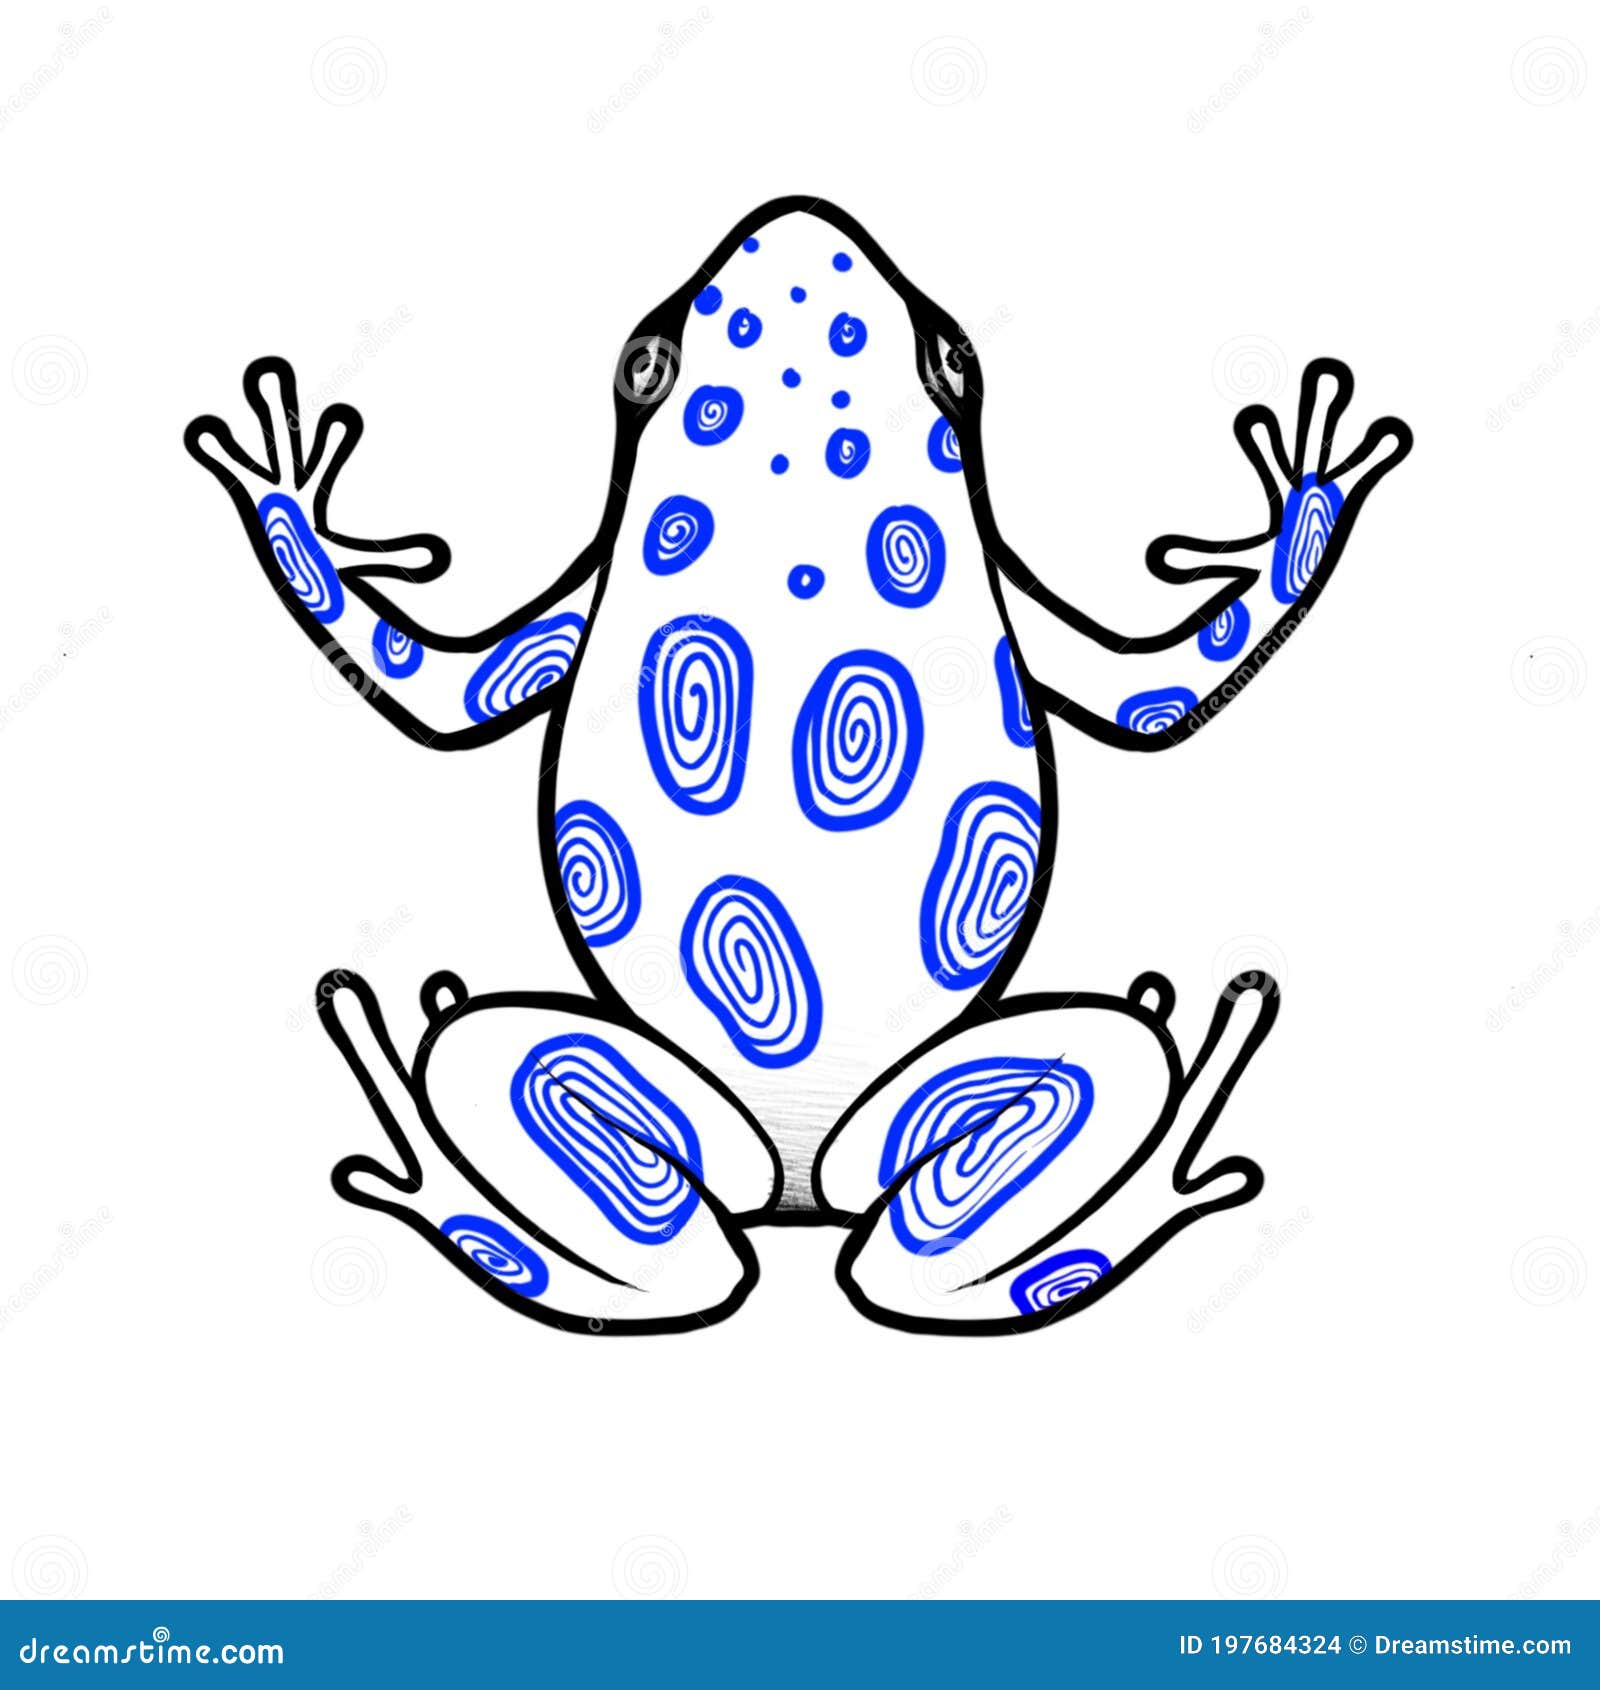 Tattoo blue linework frog stock illustration. Illustration of tattoo - 197684324